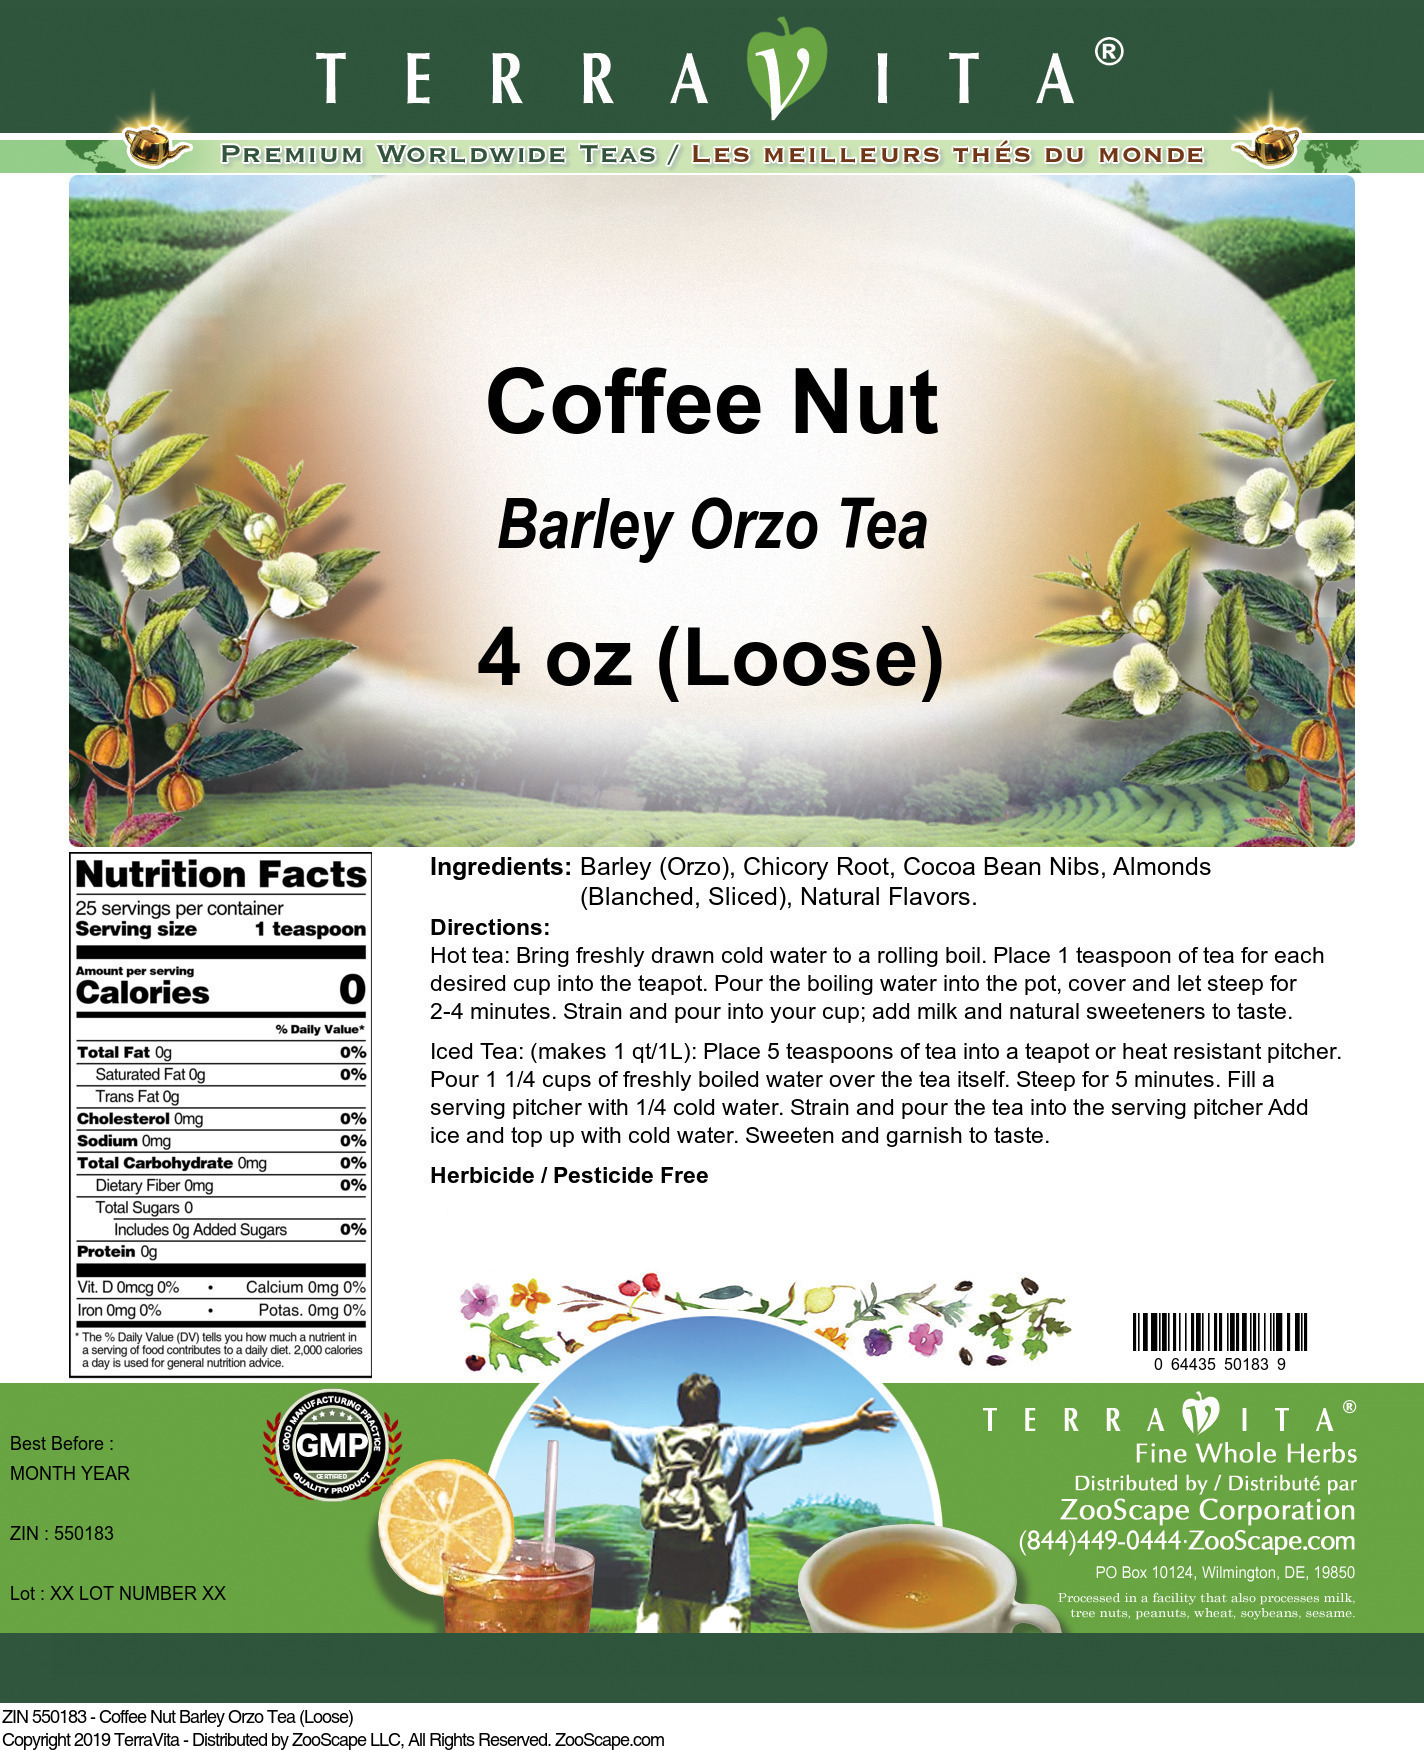 Coffee Nut Barley Orzo Tea (Loose) - Label